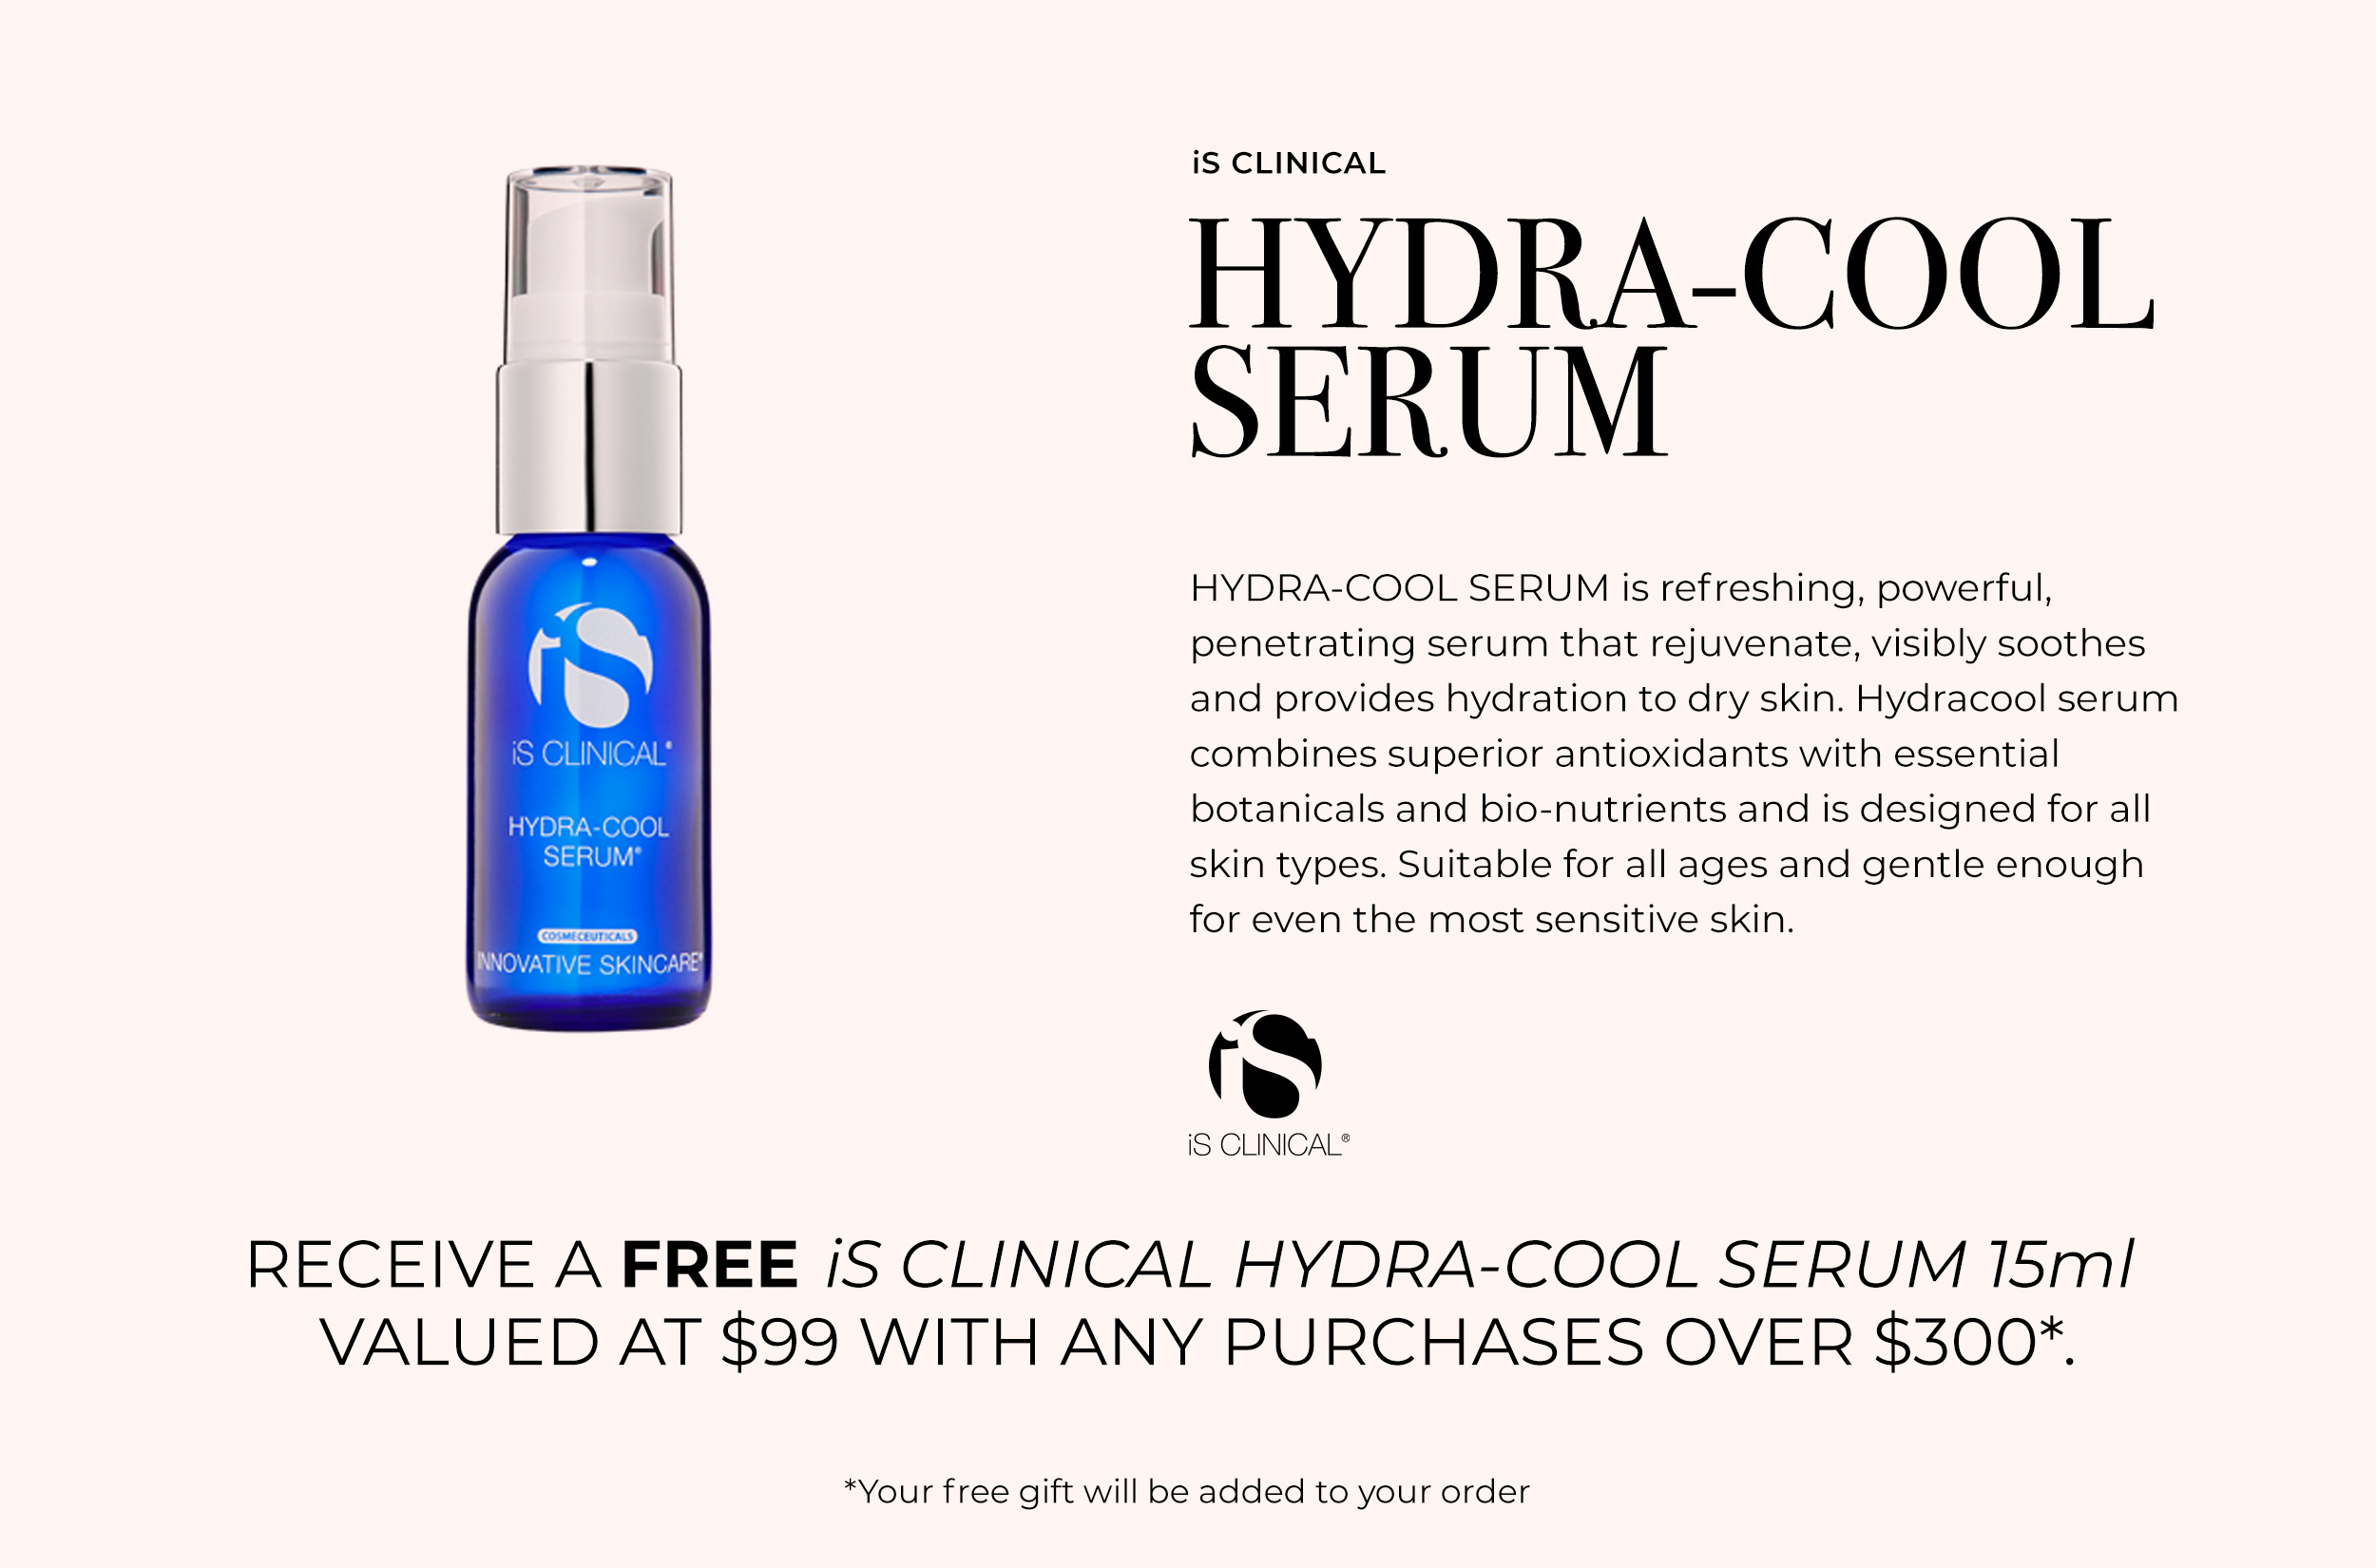 iS Clinical Hydra-Cool Serum 15ml